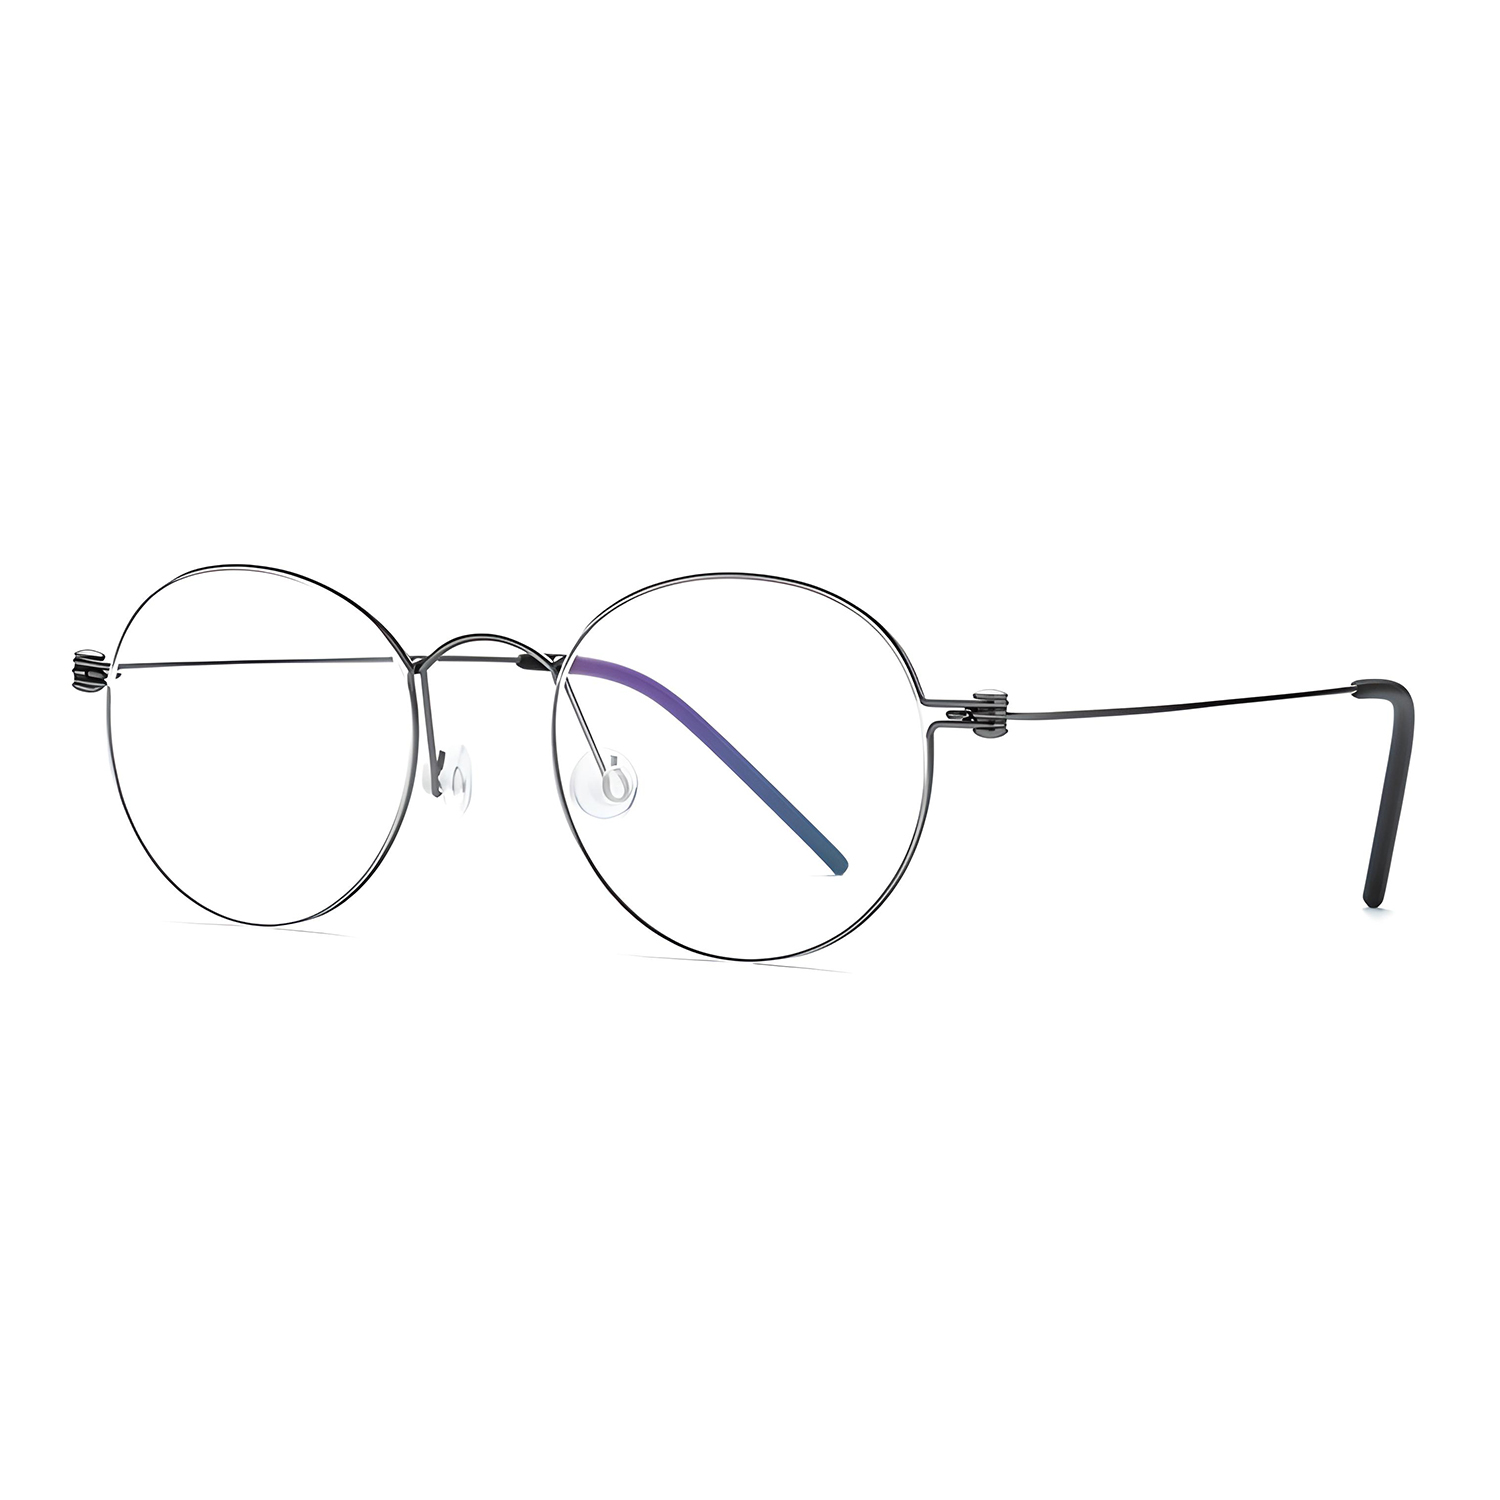 GMS Optical Nose Pads for Eyeglasses - Strap Bridge Screw-In Large